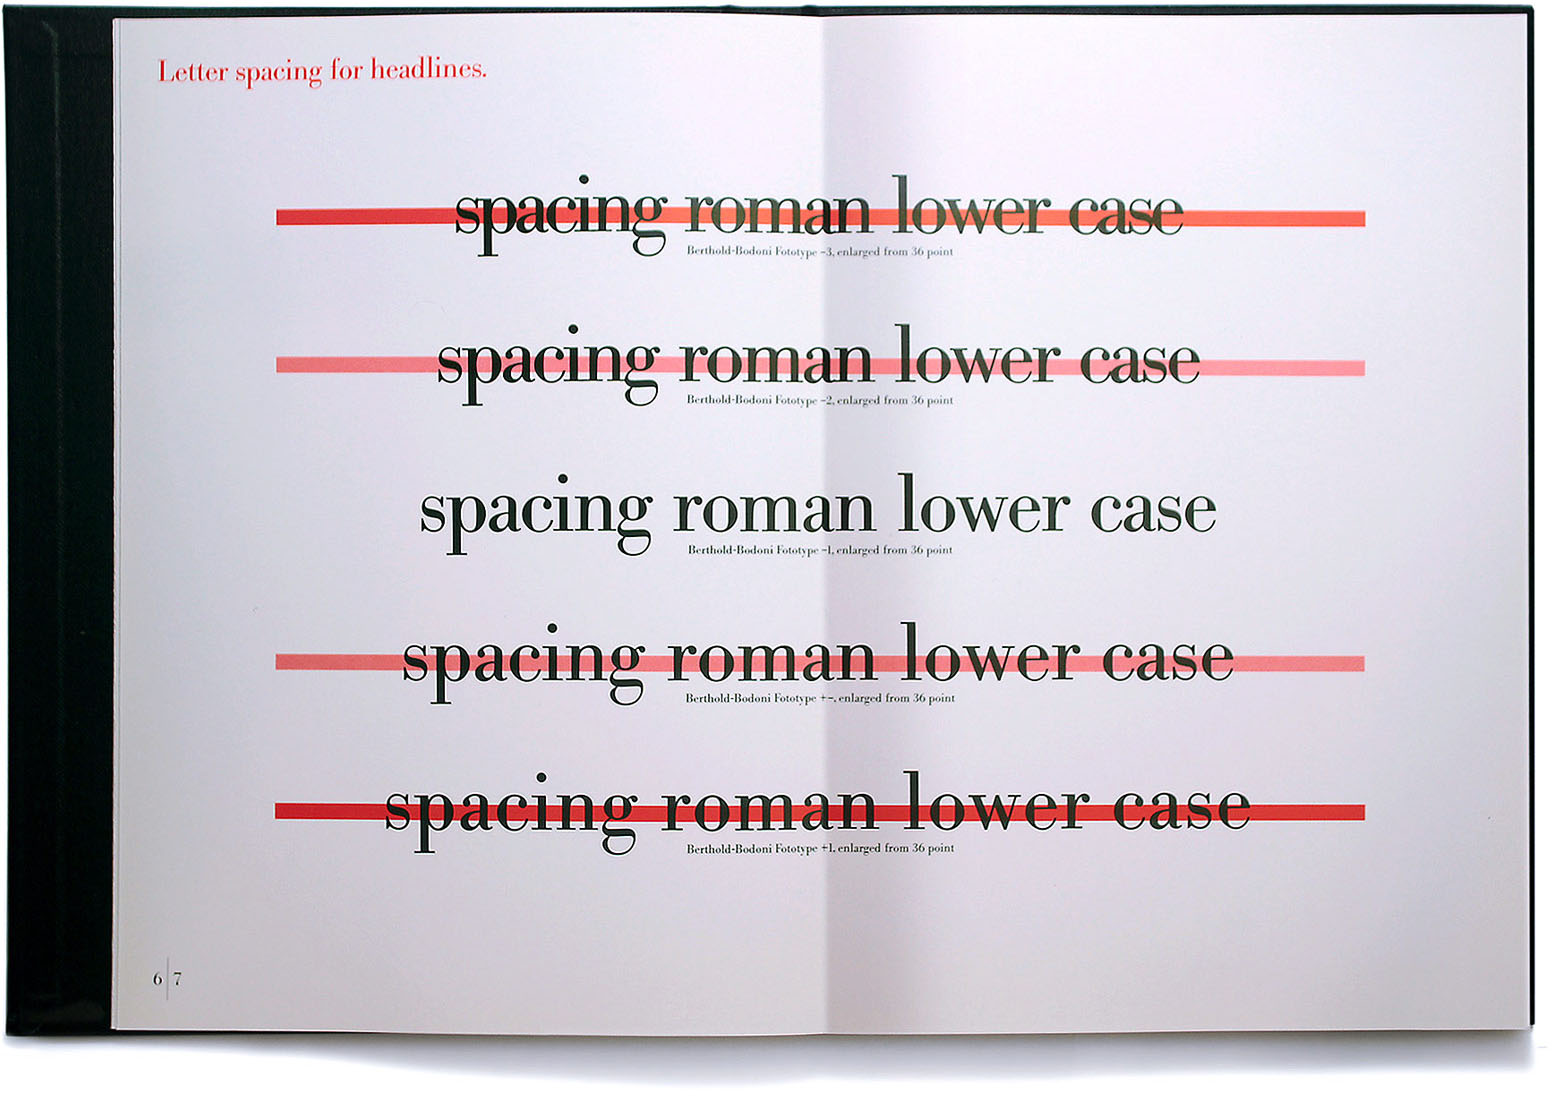 [↑] IBM Typeface Manual depicting Bodoni, design Karl Gerstner, 1990.